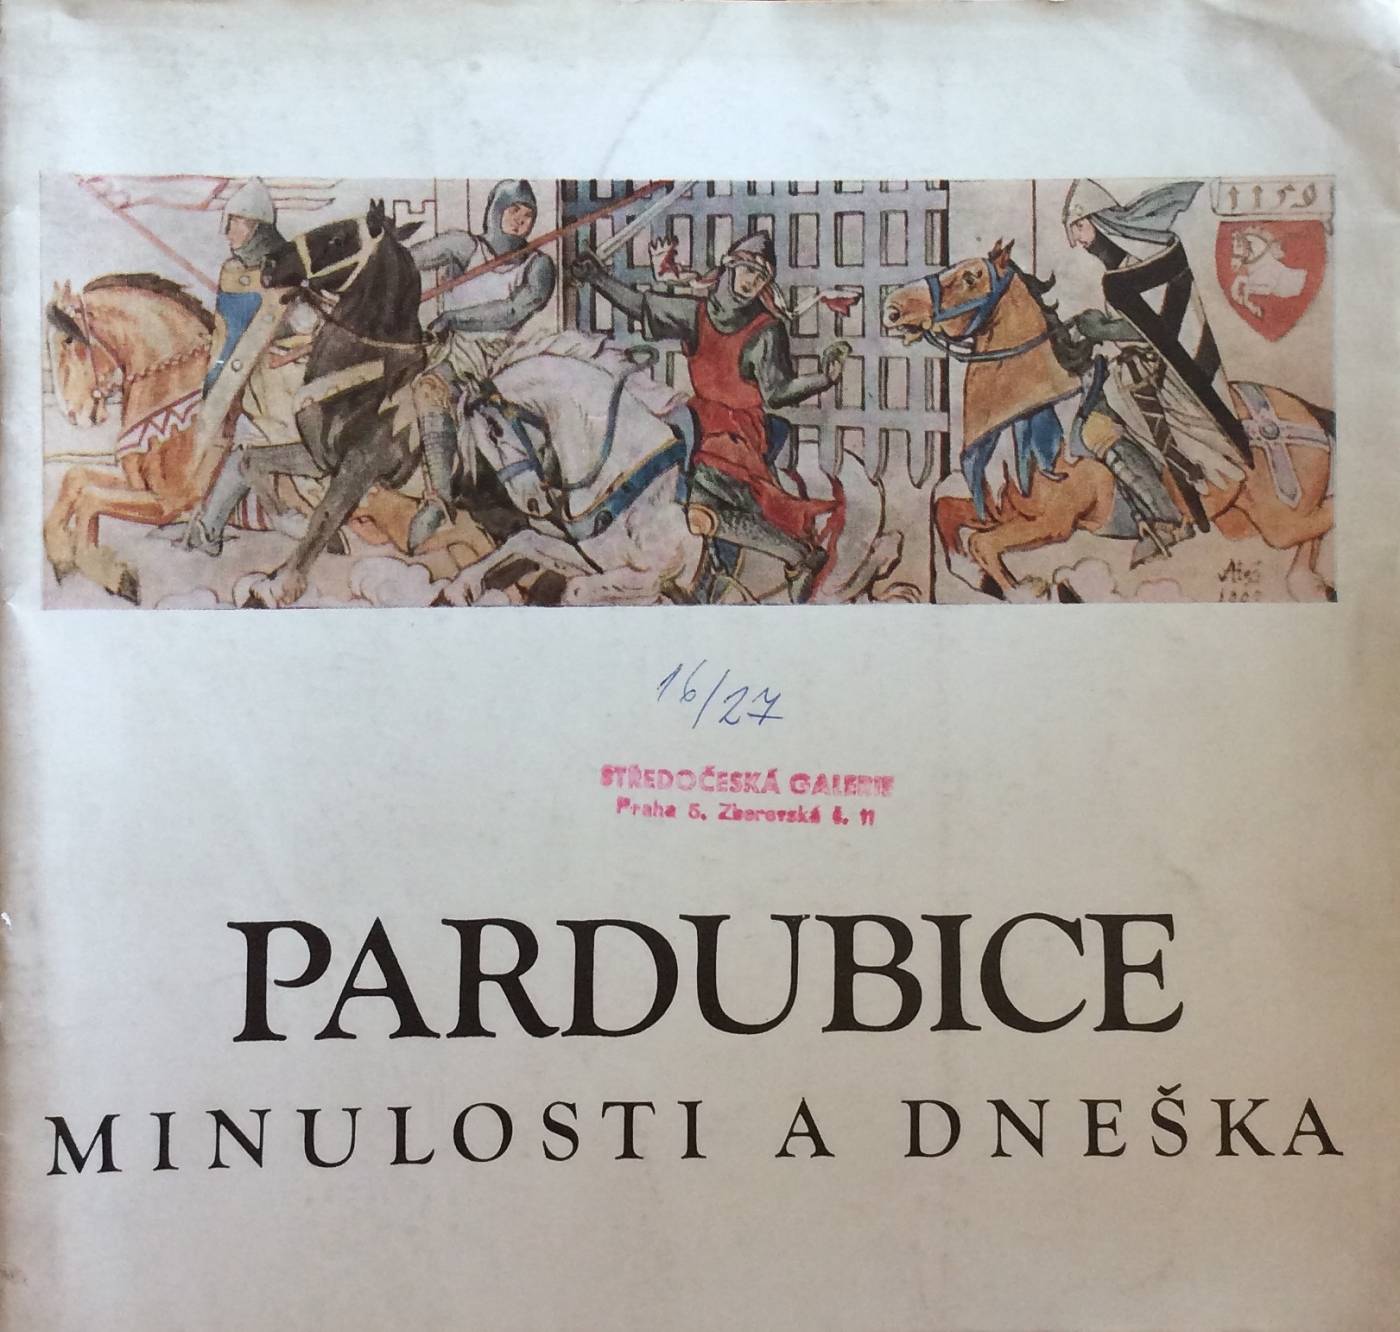 Pardubice minulosti a dneška